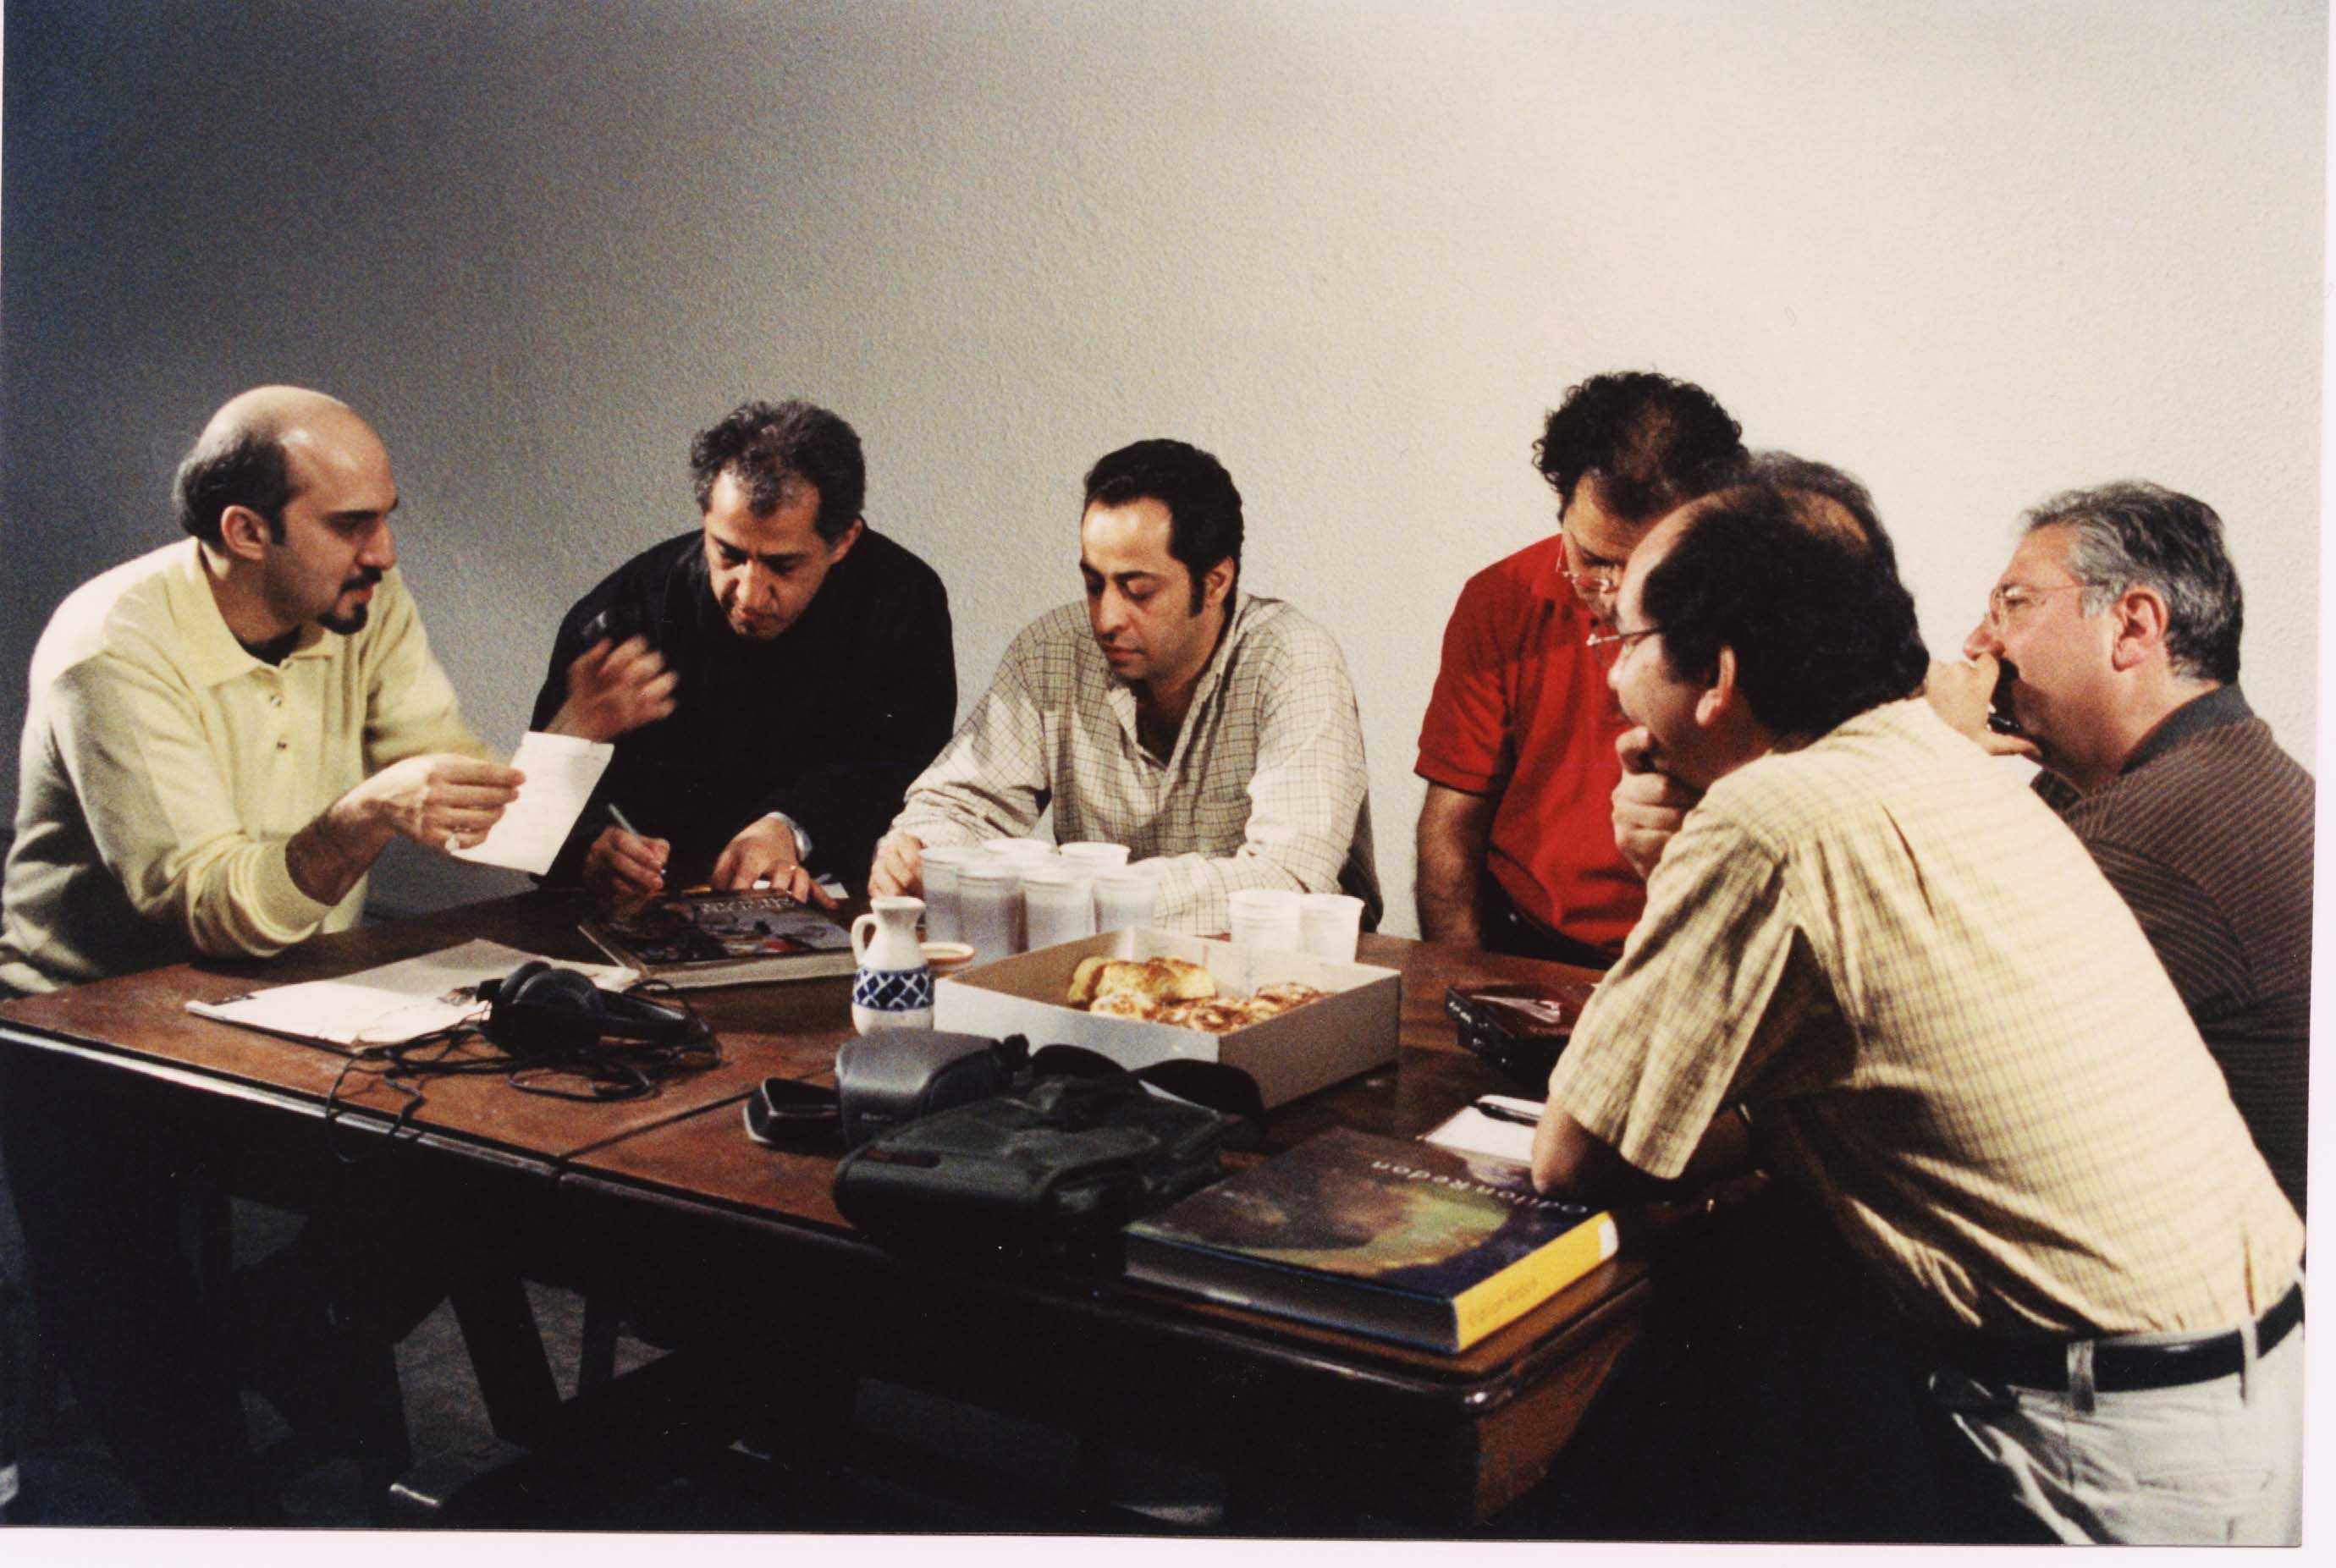 Workshop. 6 Days 6 Painters - Lale Gallery - Tehran, Iran 2002